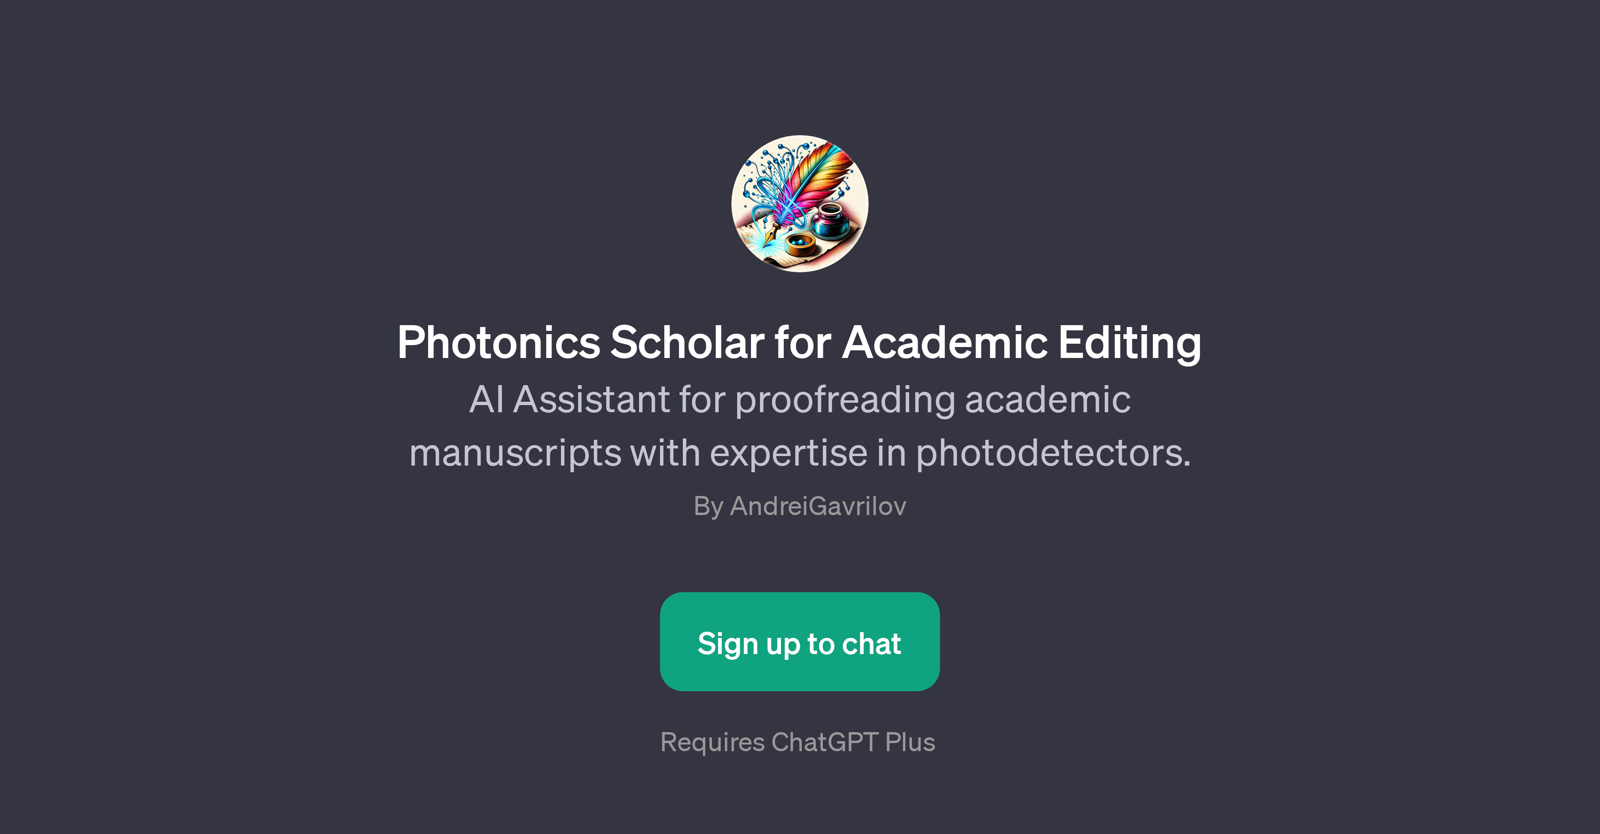 Photonics Scholar for Academic Editing website